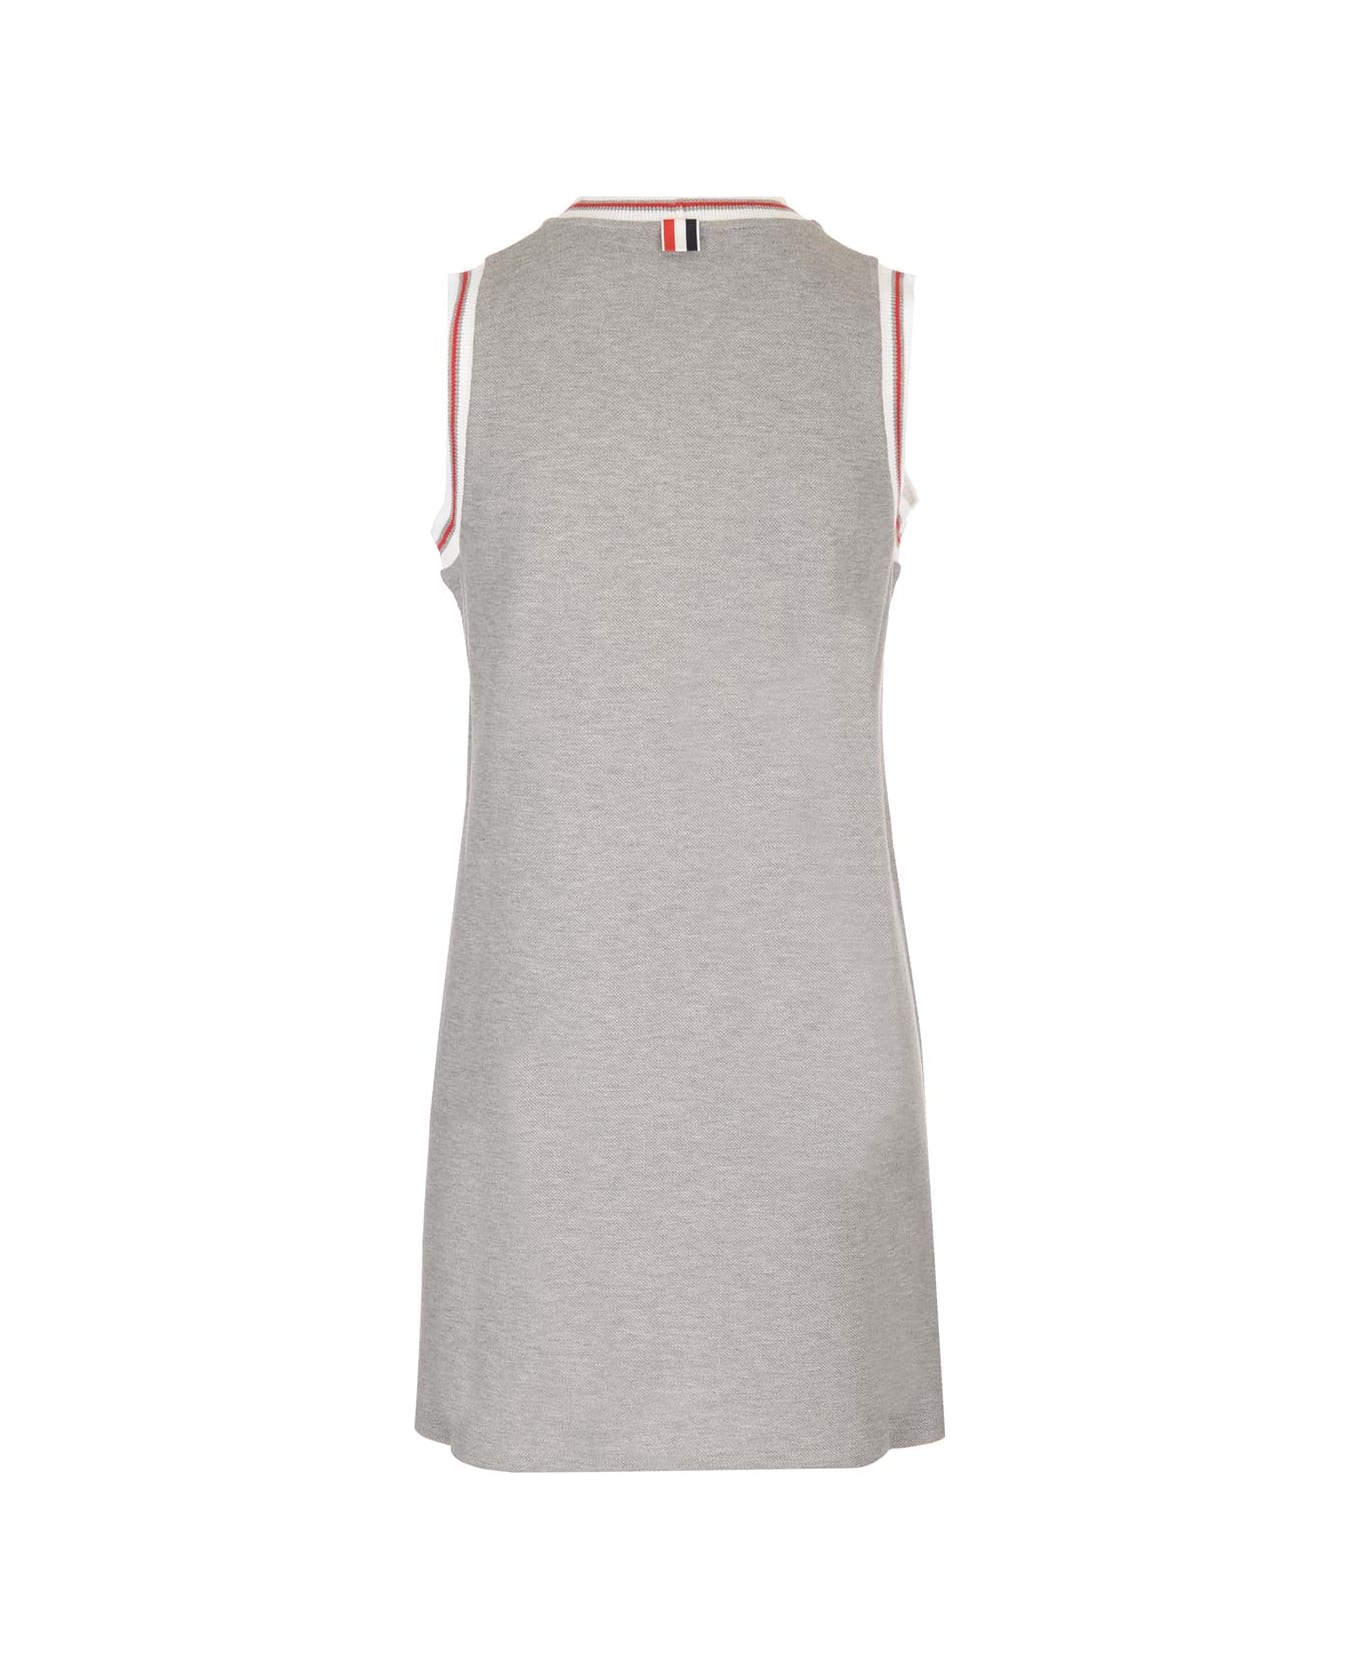 Thom Browne Cotton Pique Tennis Dress